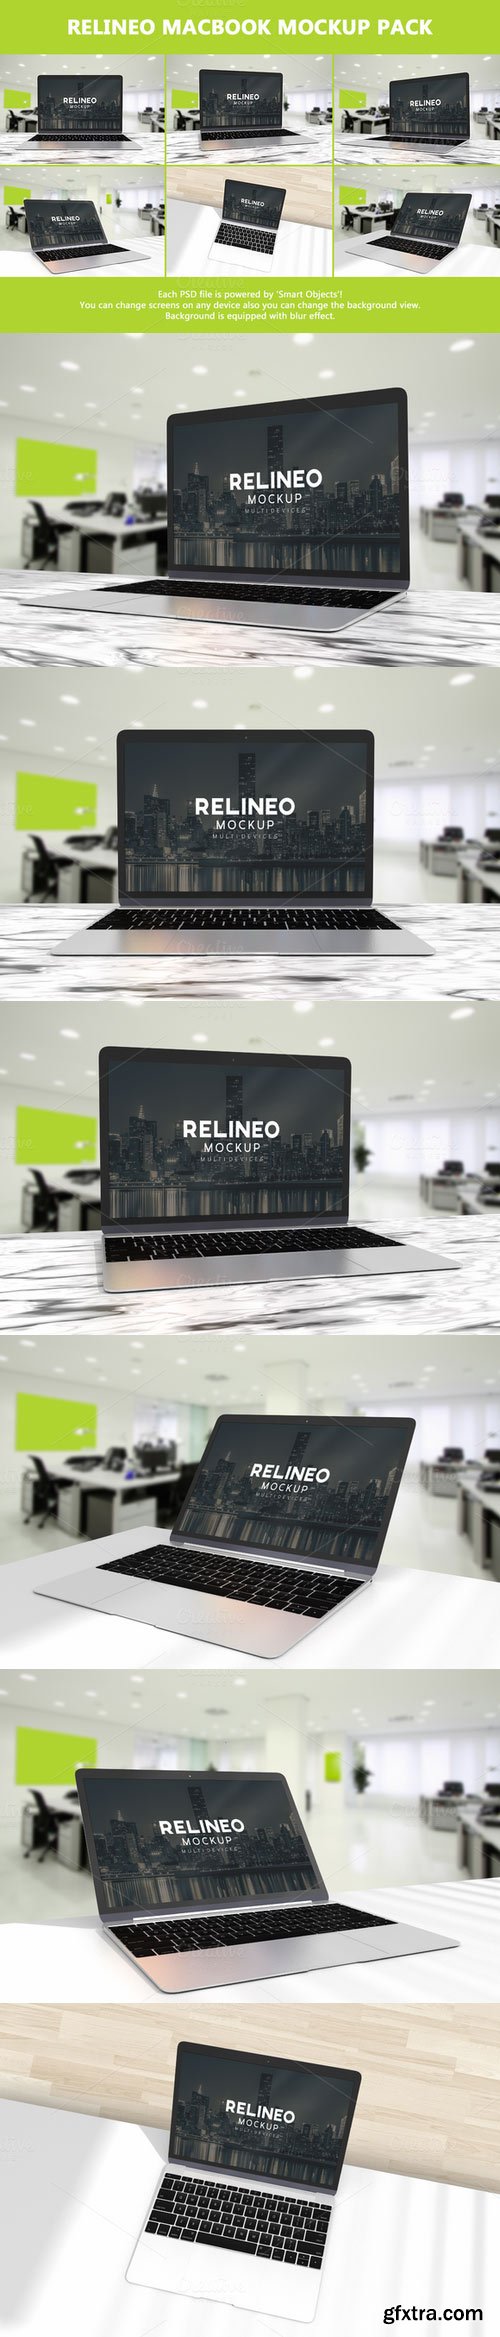 CM - Relineo Macbook Mockup Pack - #1 455069